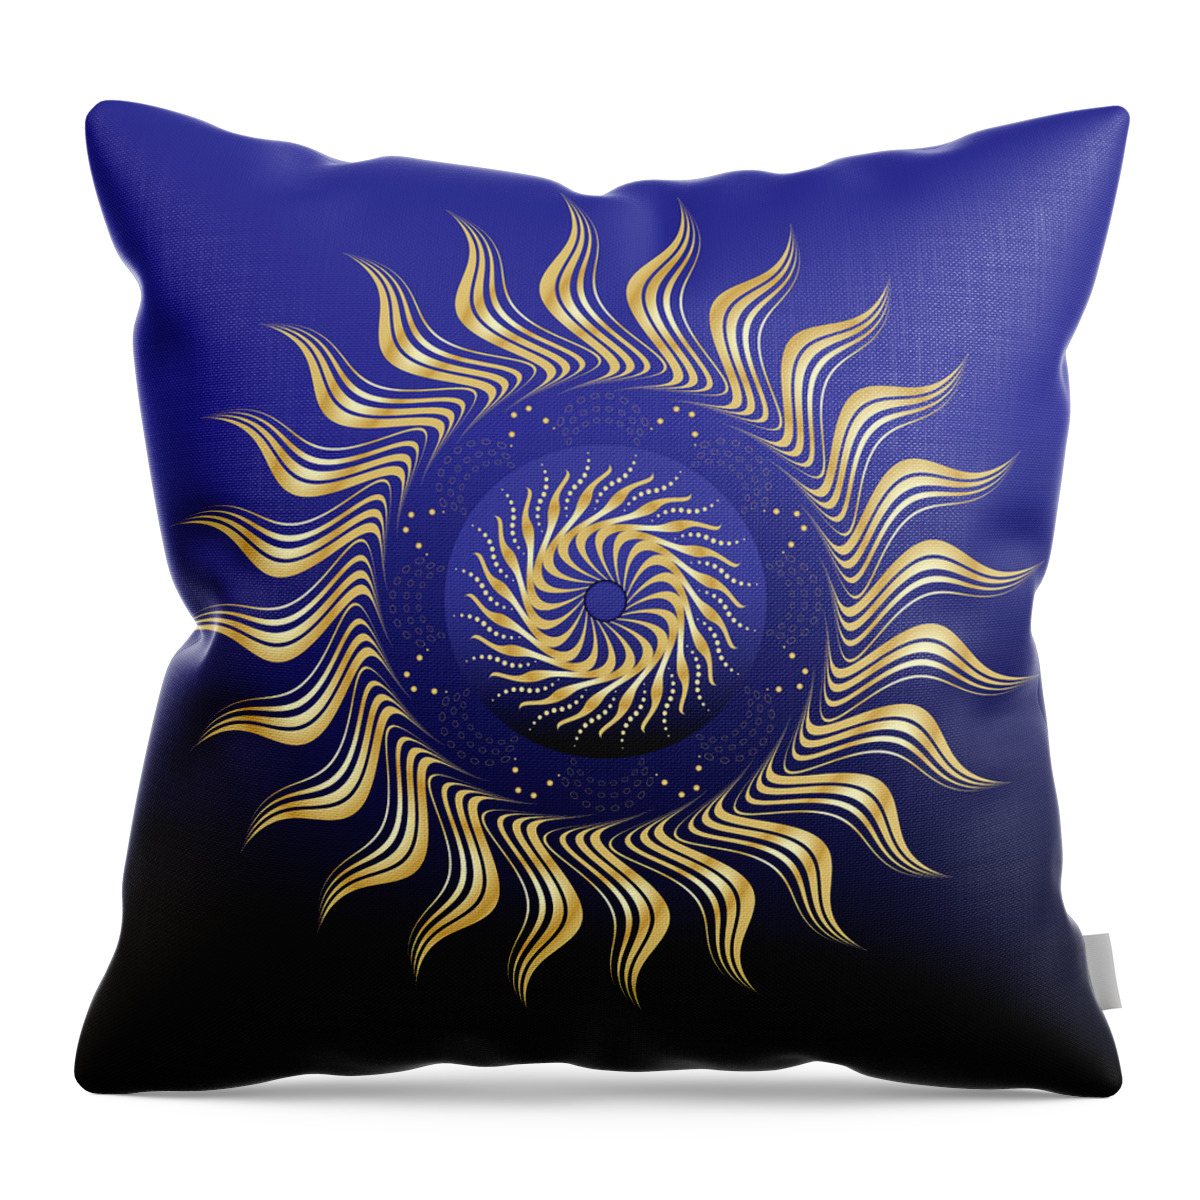 Mandala Throw Pillow featuring the digital art Complexical No 2320 by Alan Bennington